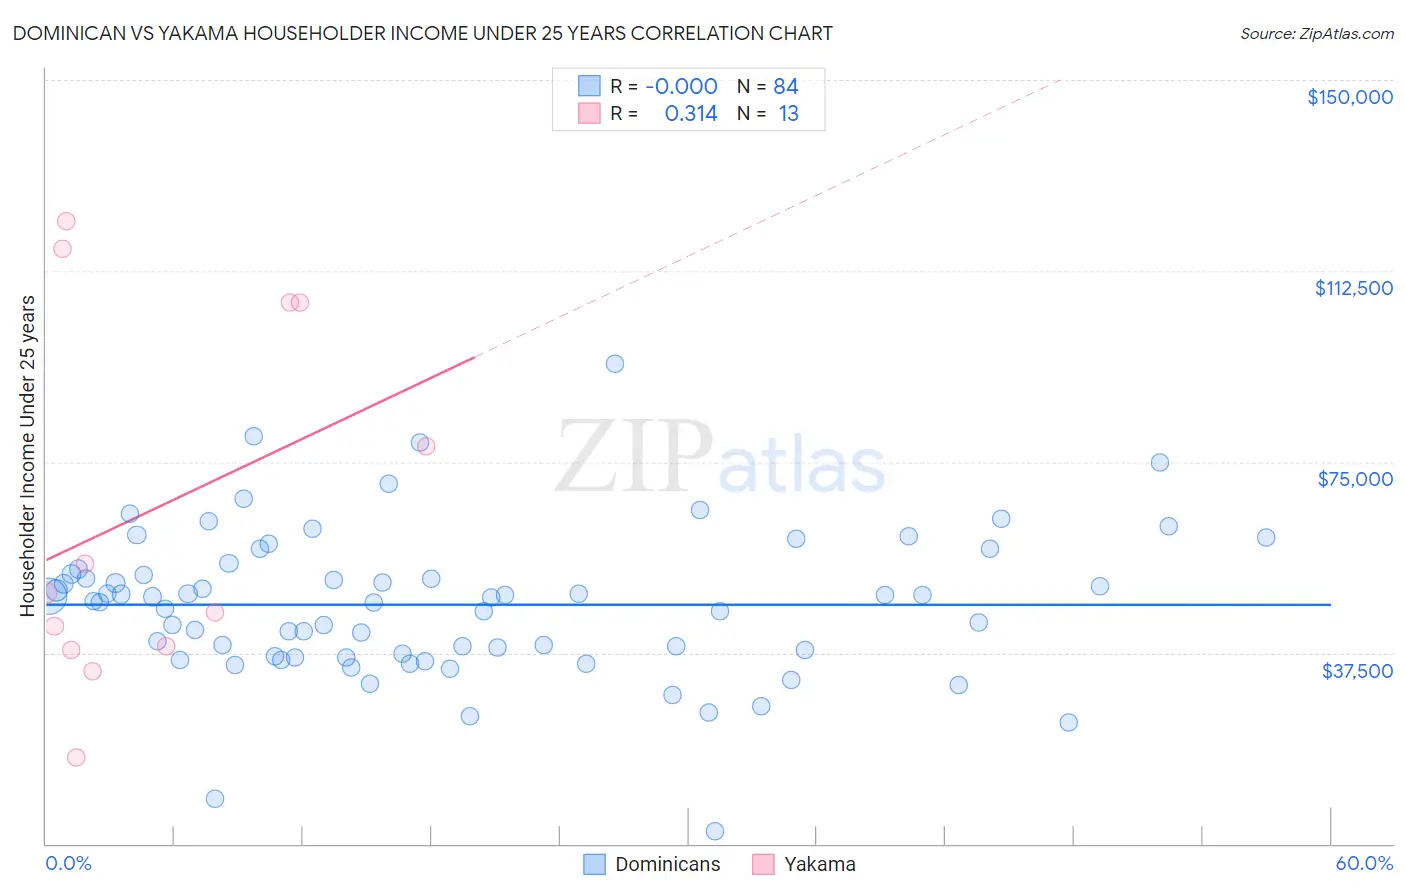 Dominican vs Yakama Householder Income Under 25 years